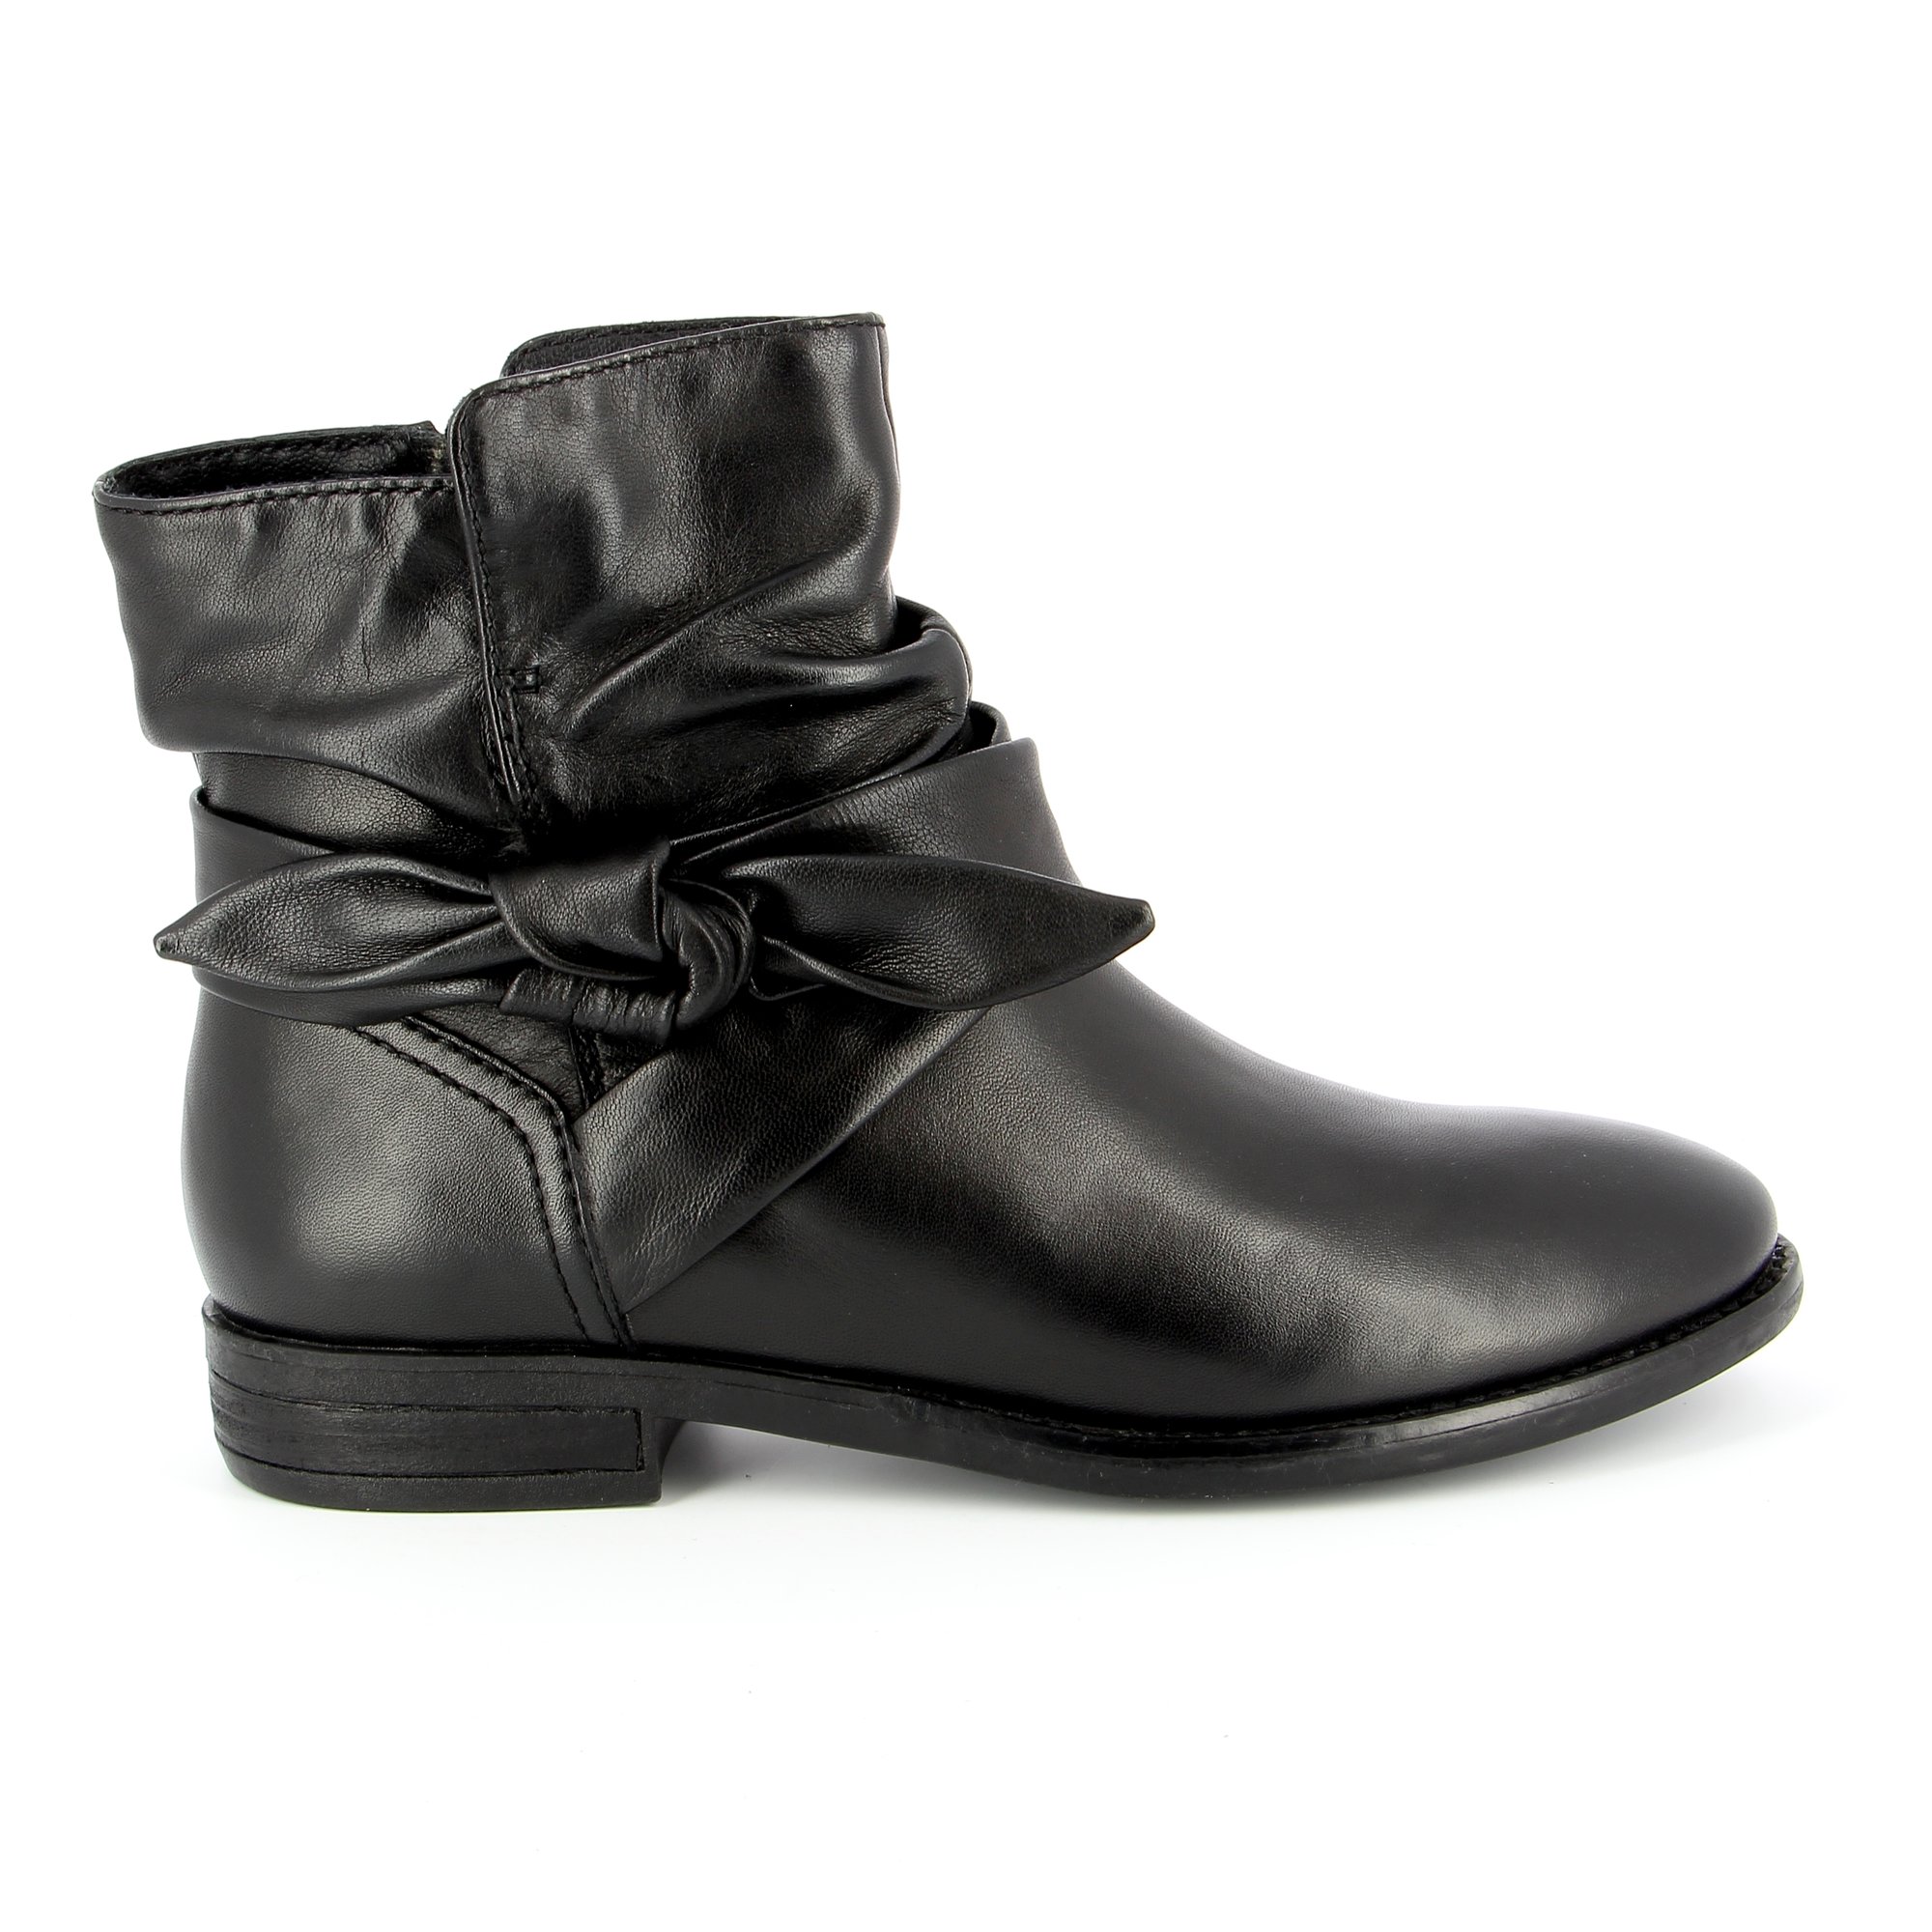 Spm Boots noir